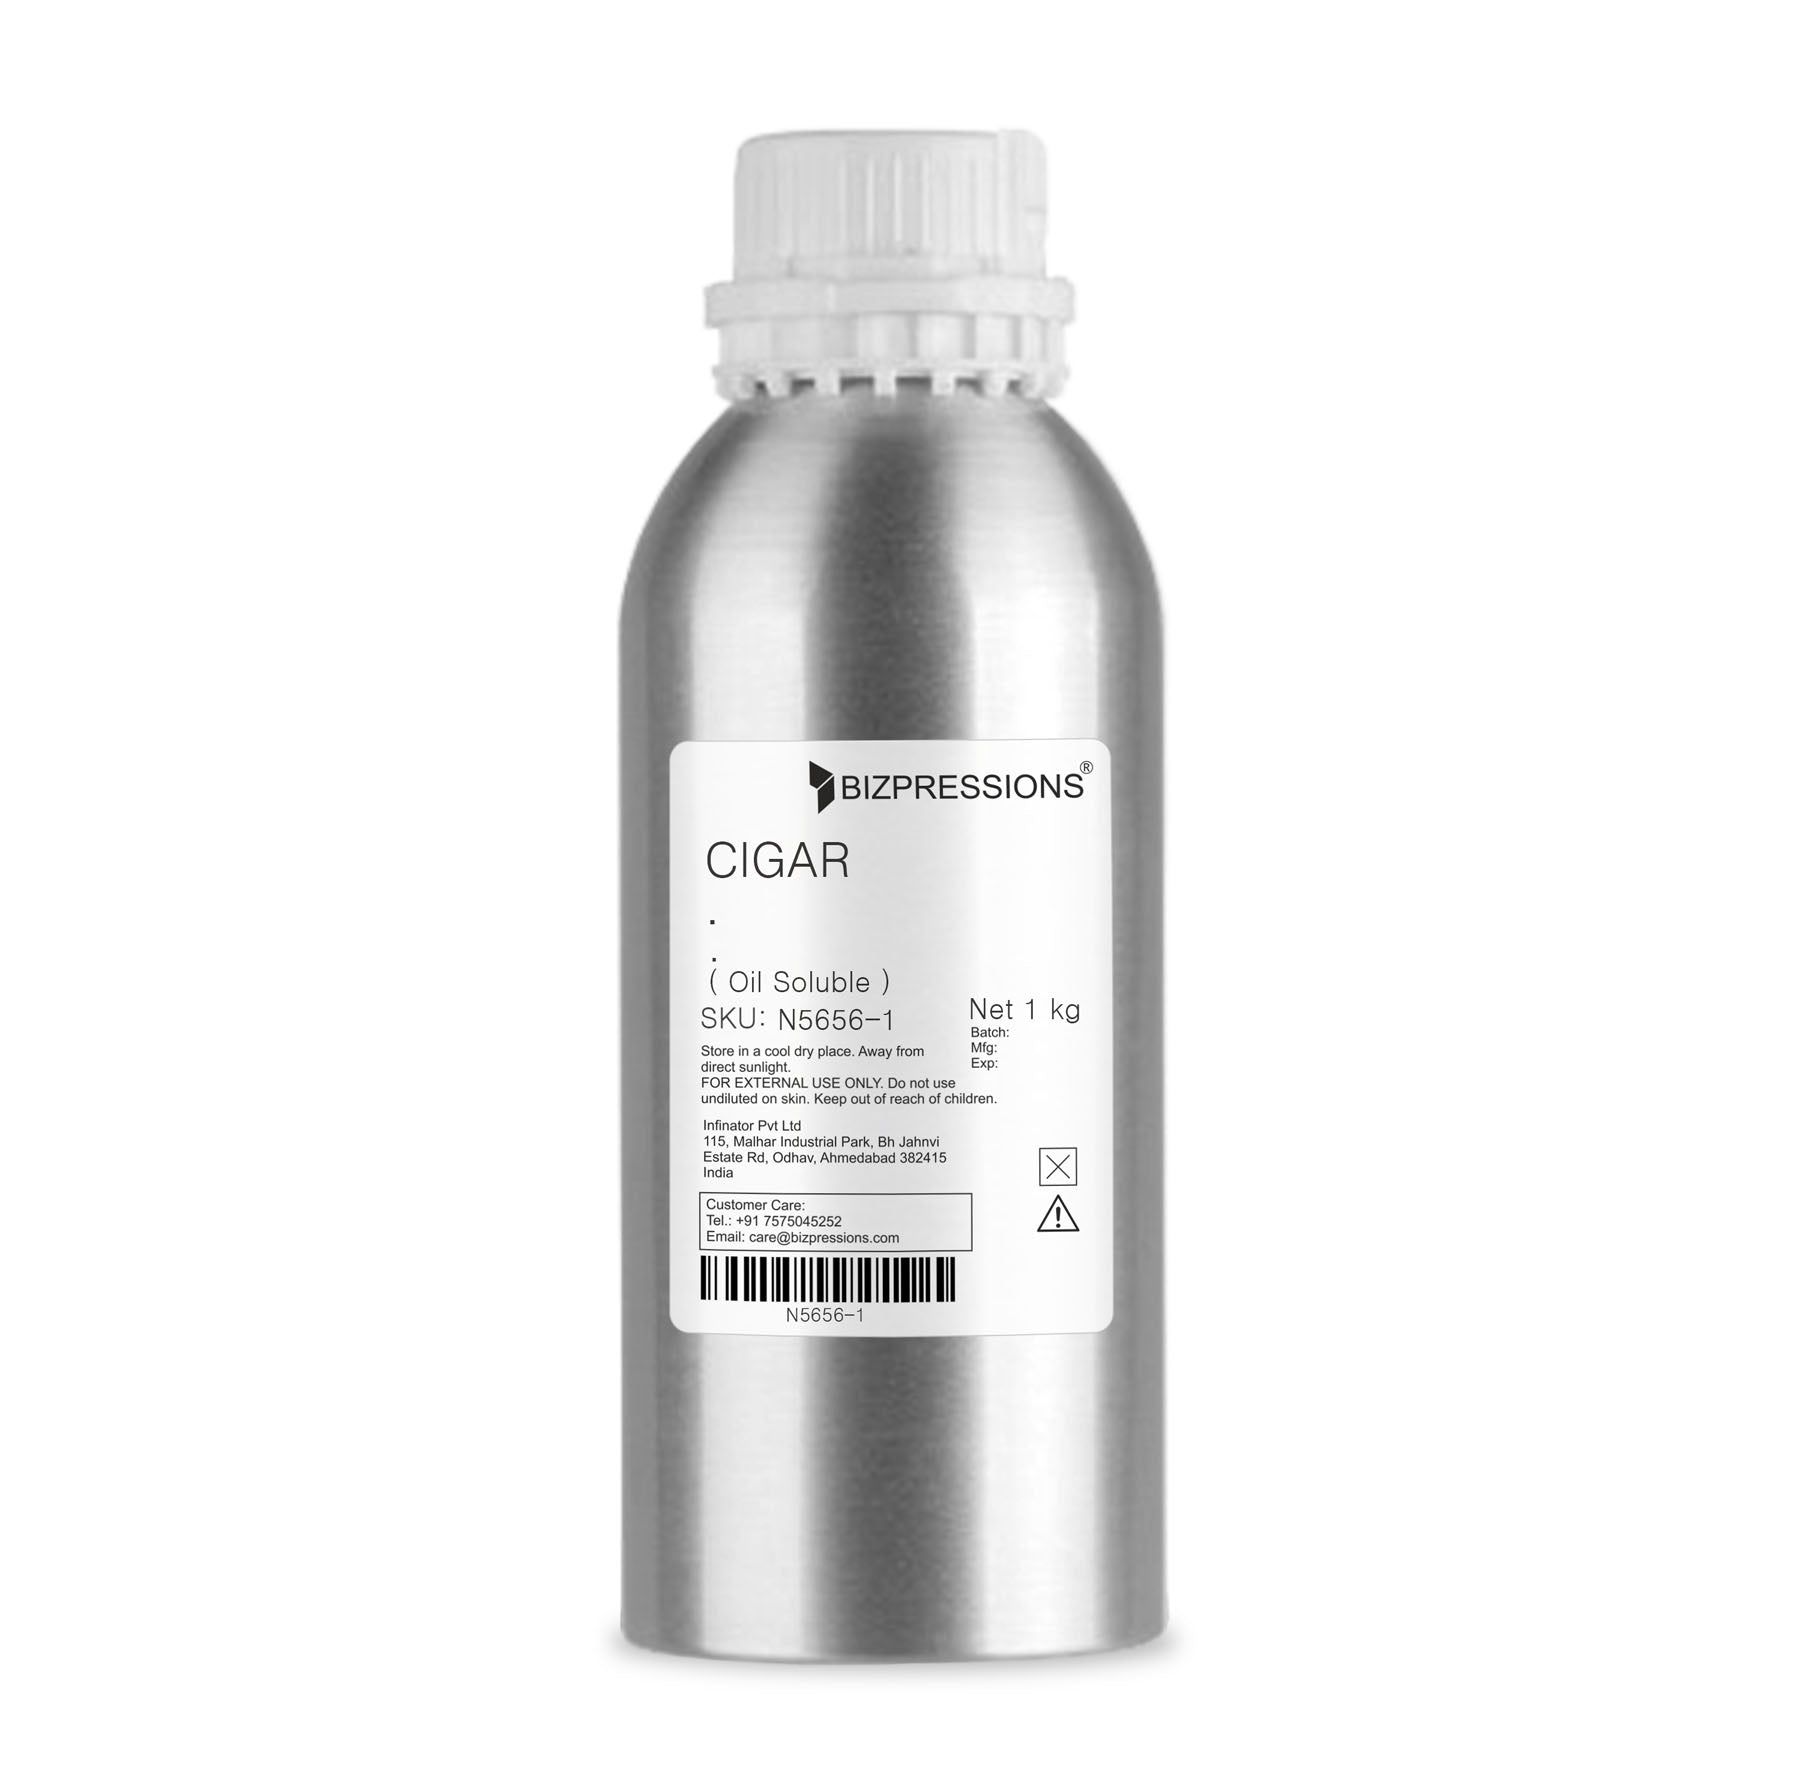 CIGAR - Fragrance ( Oil Soluble ) - 1 kg